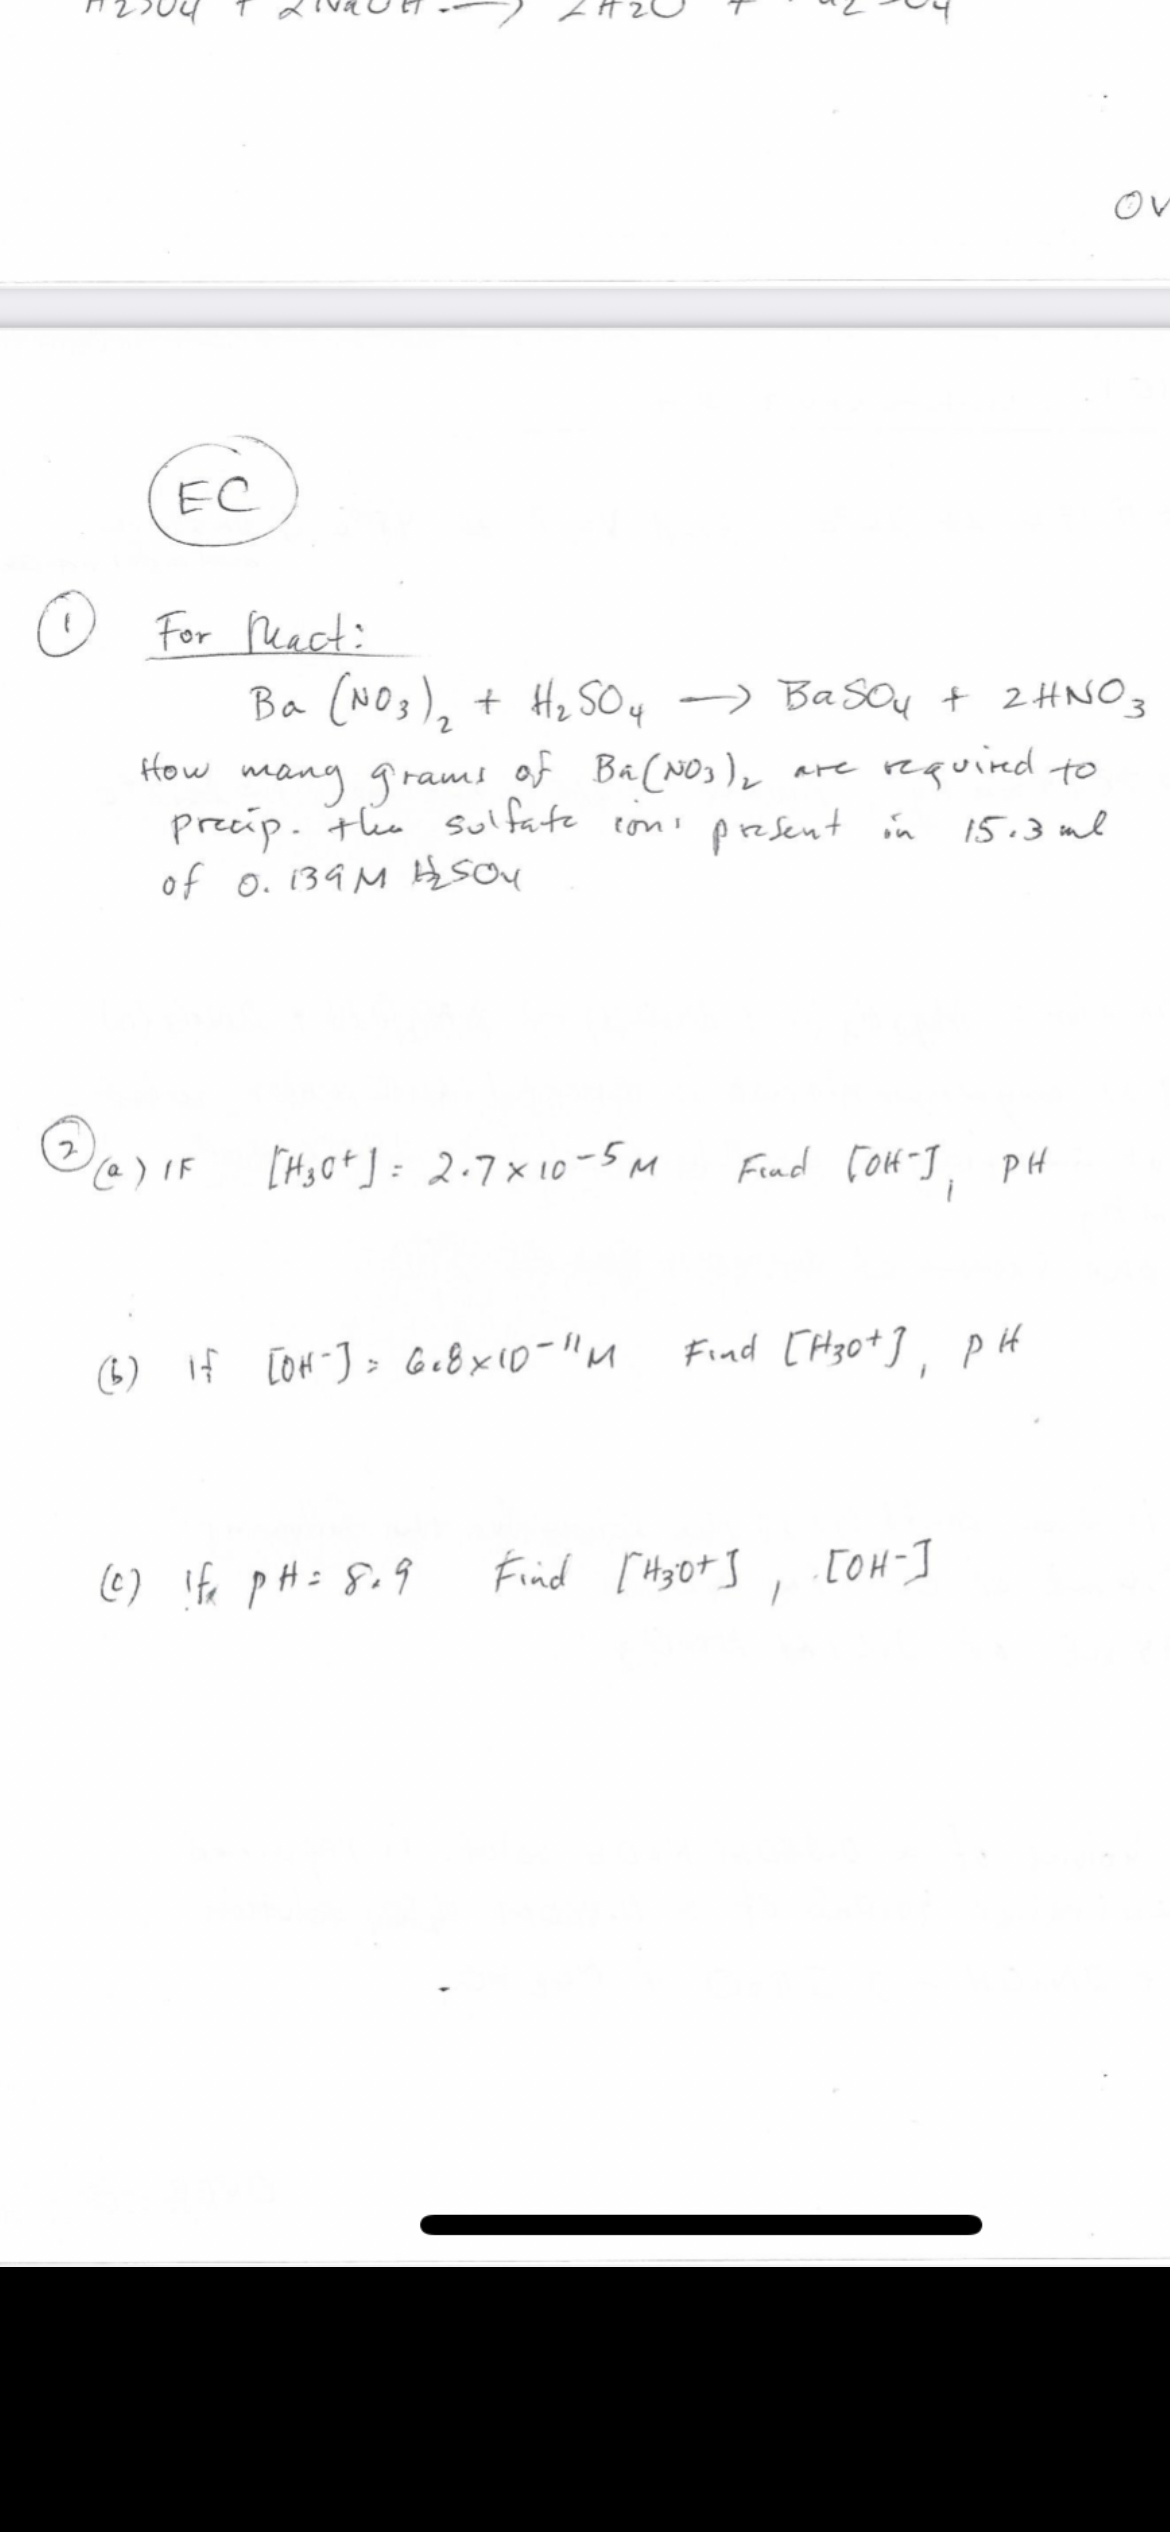 ov
EC
O For Peact:
Ba (NOs), + H, SOy -> BaSOu + 2HNO3
How mang grams of Ba(NOs),
precip. the sulfate ton present in
of o. 139 M Hsou
are required to
15.3 ml
[Hs Ot ] = 2.7x 10-5M
Find Co4-], PH
Find [ H30*], p H
(6) If [OH J> Ge8x10-"M
(6) ife pH= 8.9
Find [ Hyot S, [OH-I
